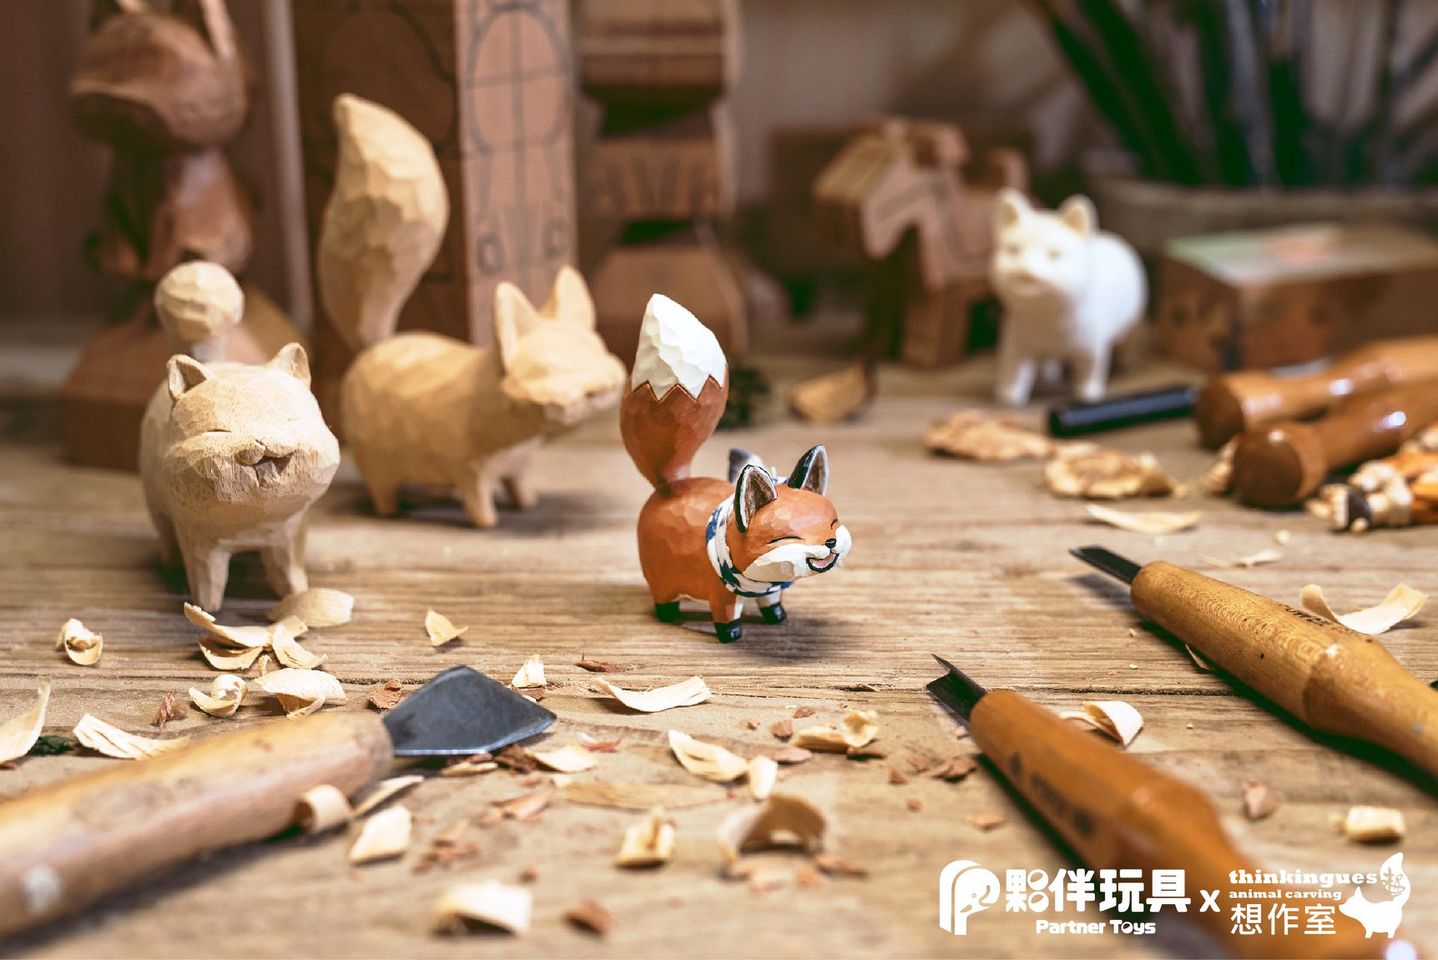 Partner Toys x Animal Crave Gashapon Craving Zoo 5 Trading Figure Set